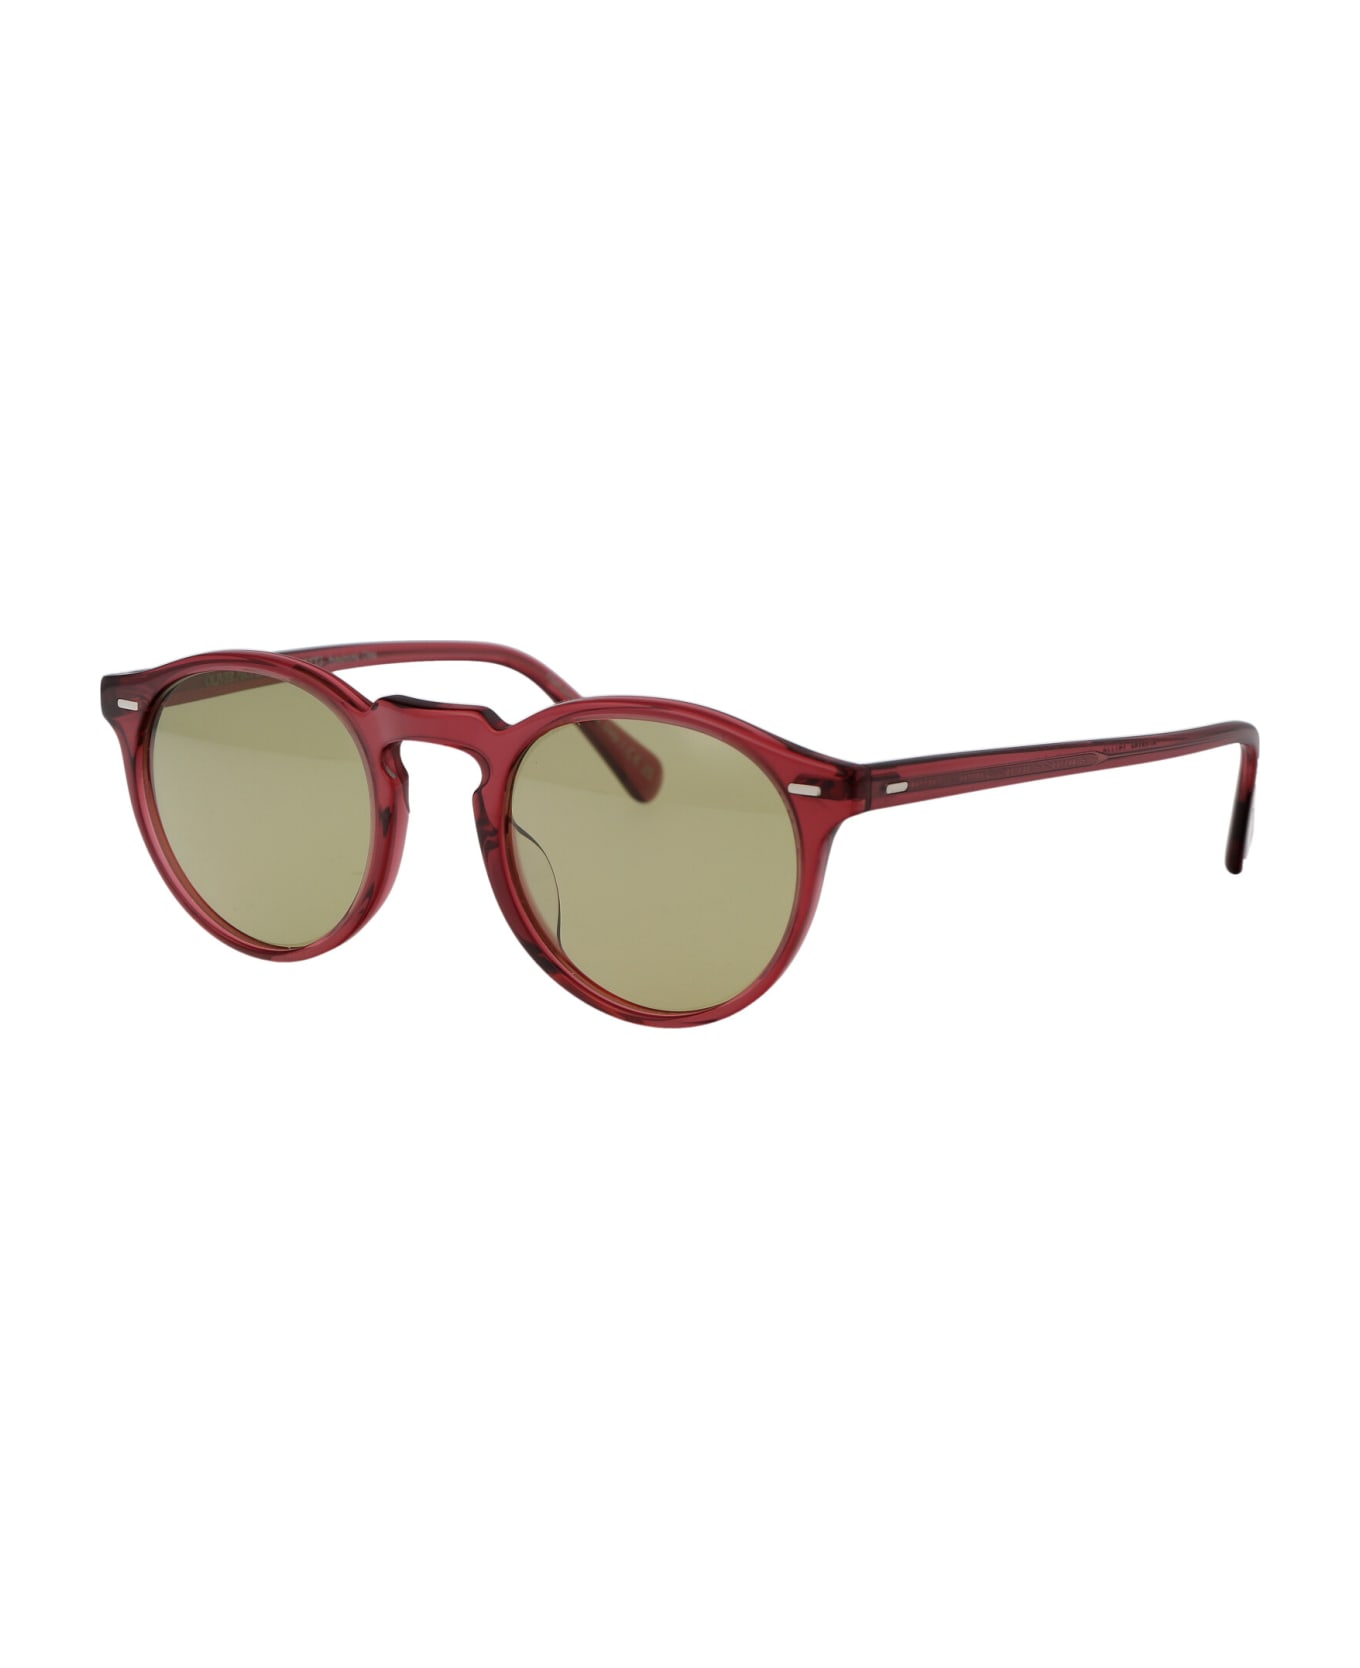 Oliver Peoples Gregory Peck Sun e558 Sunglasses - 17644C Translucent Rust